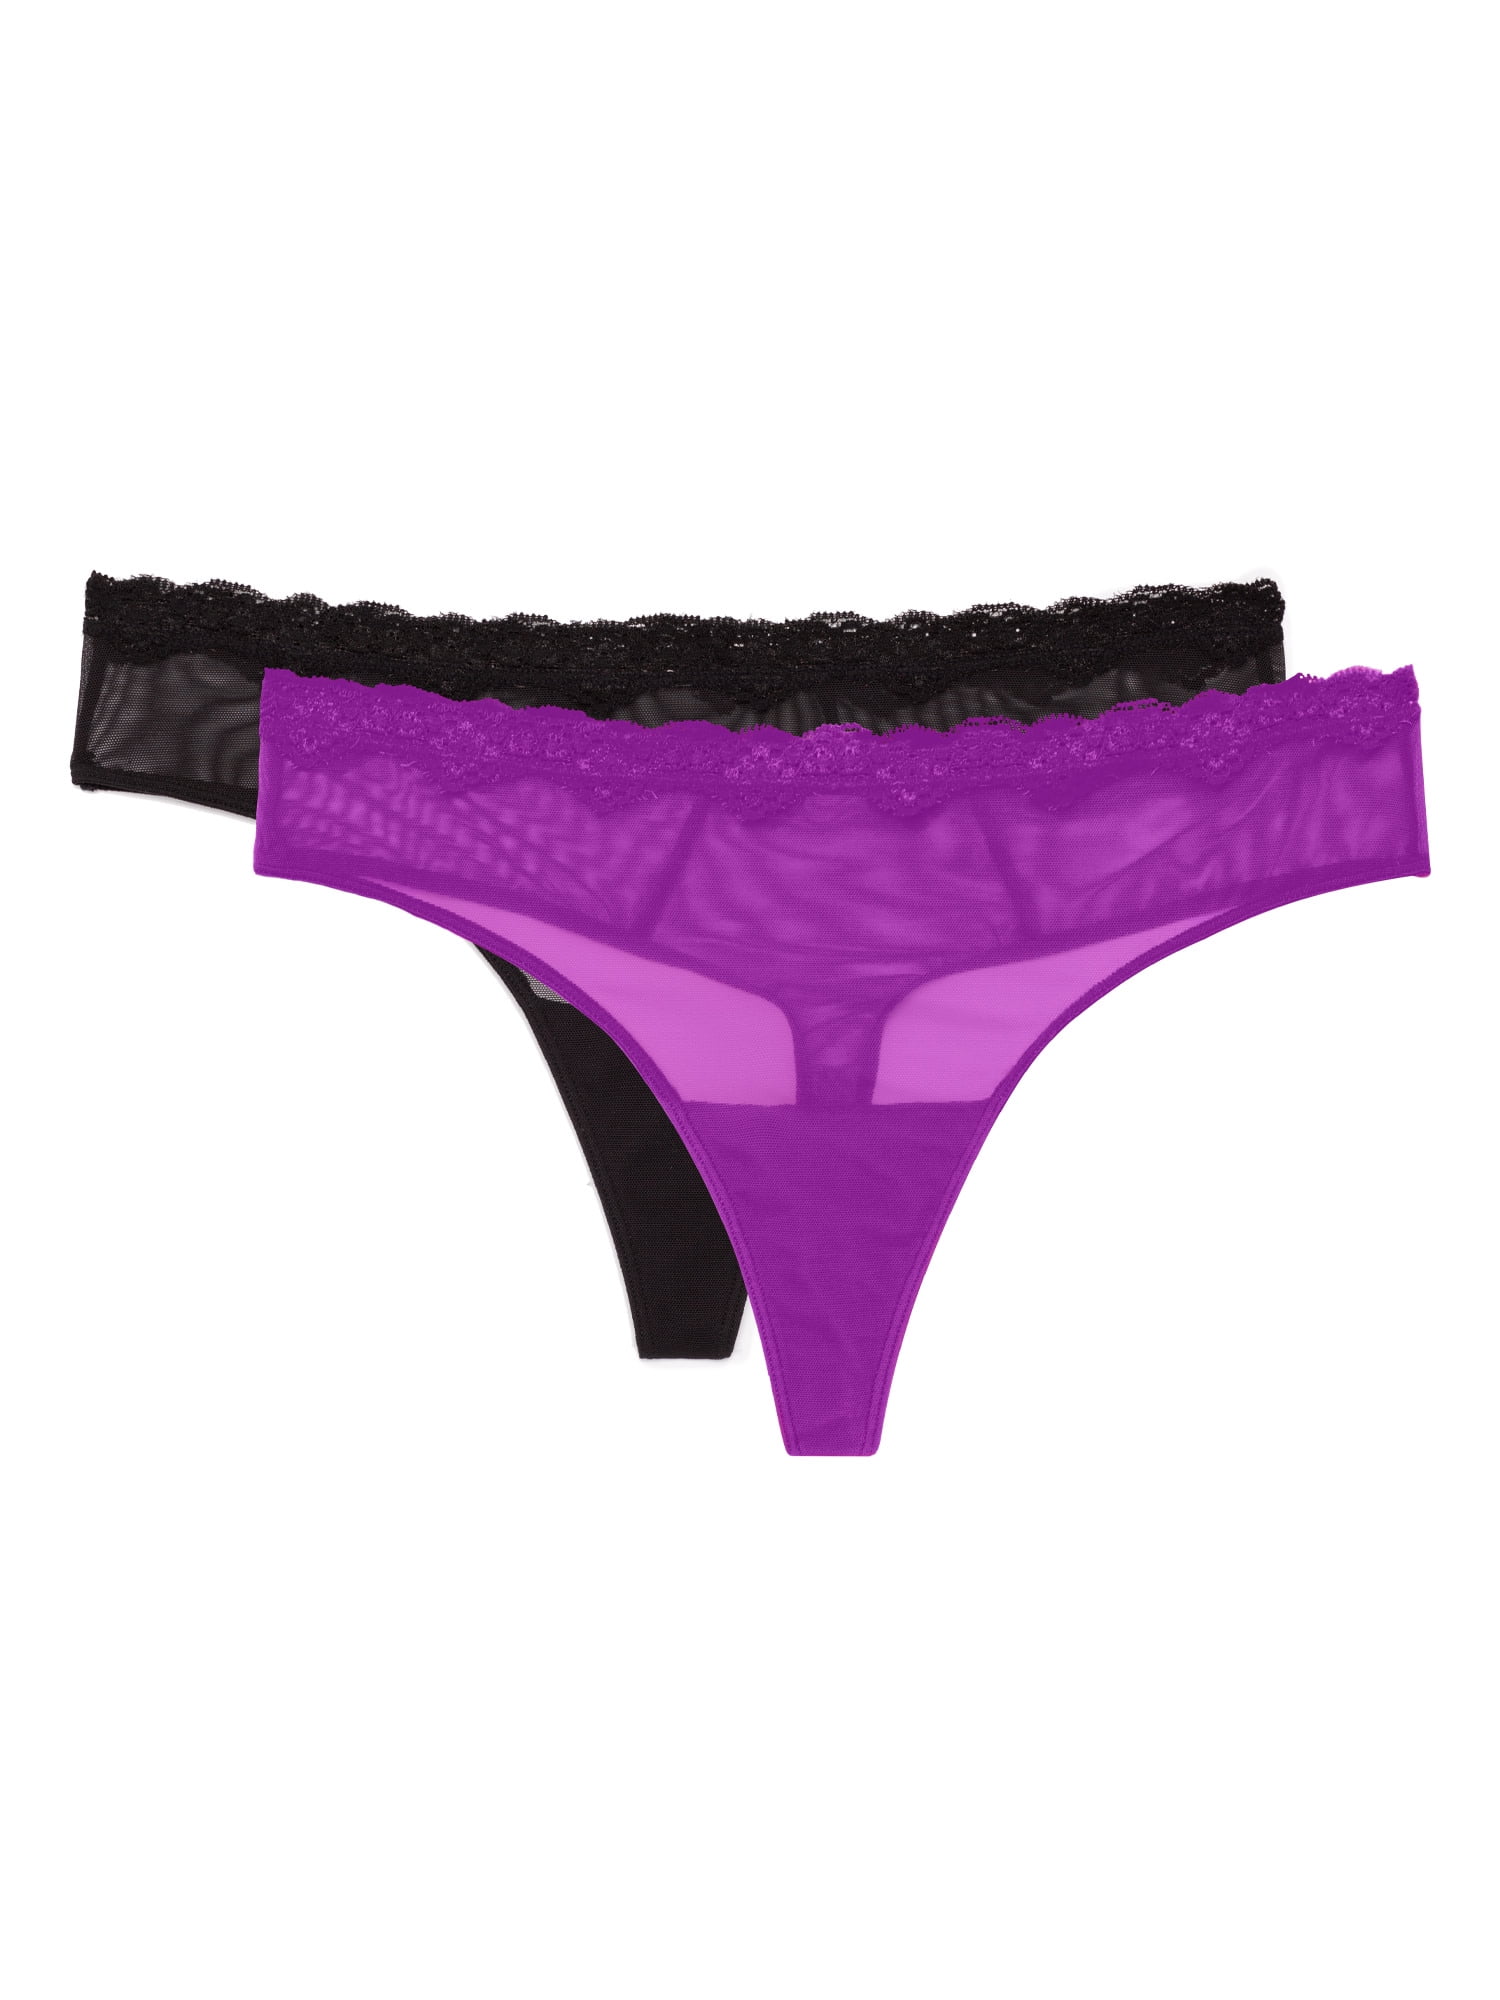 Women's Thongs Underwear Cotton Seamless Thongs for Women Lace Trim Panties 